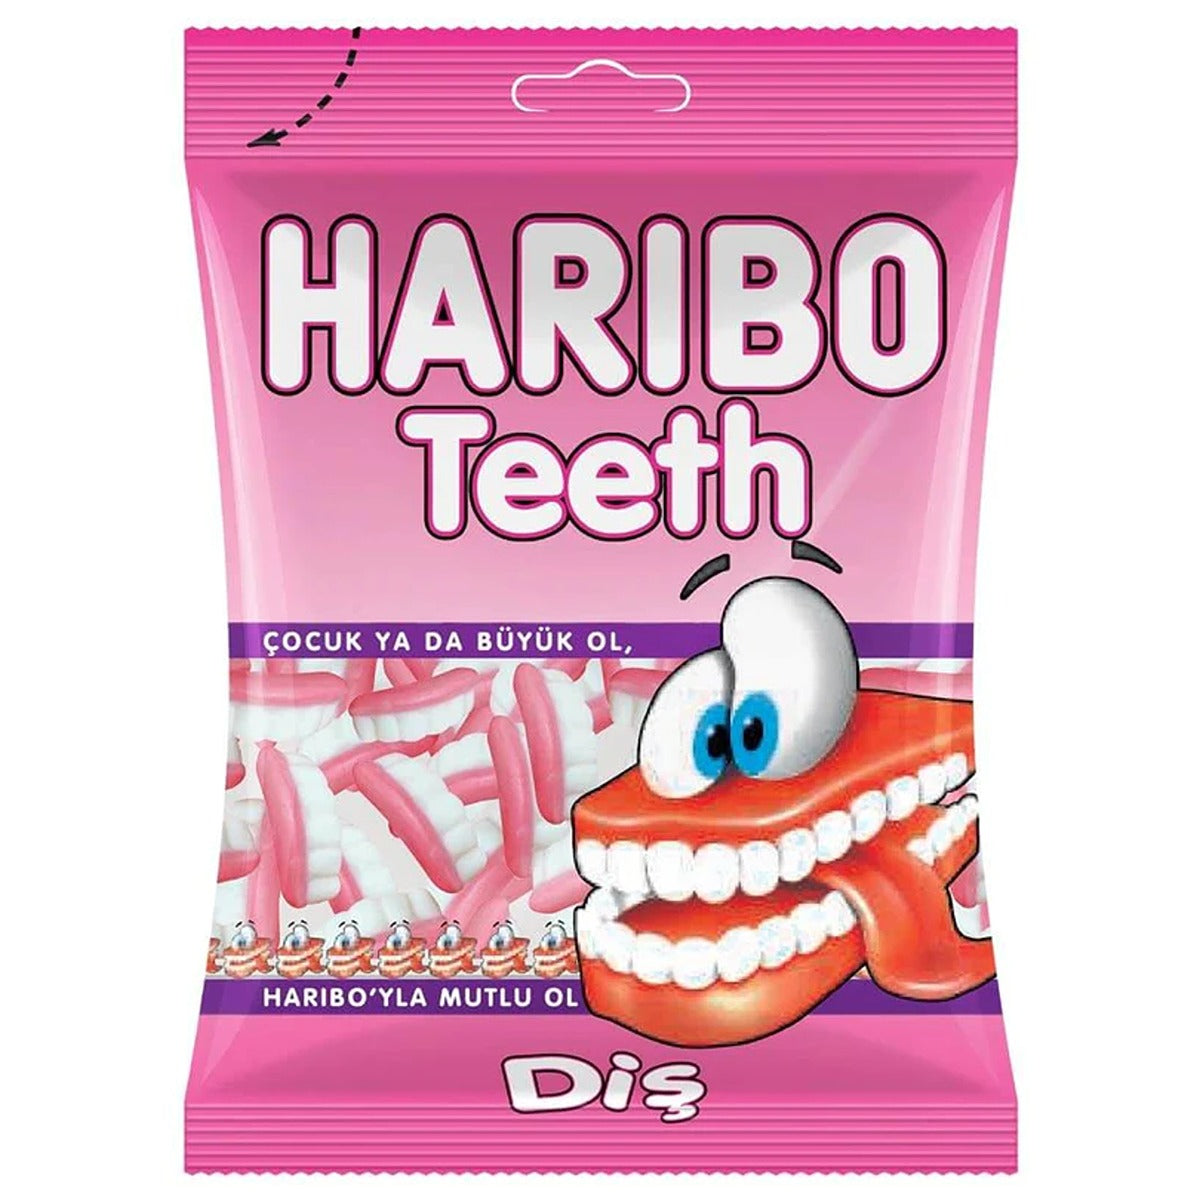 Haribo - Teeth - 80g - Continental Food Store